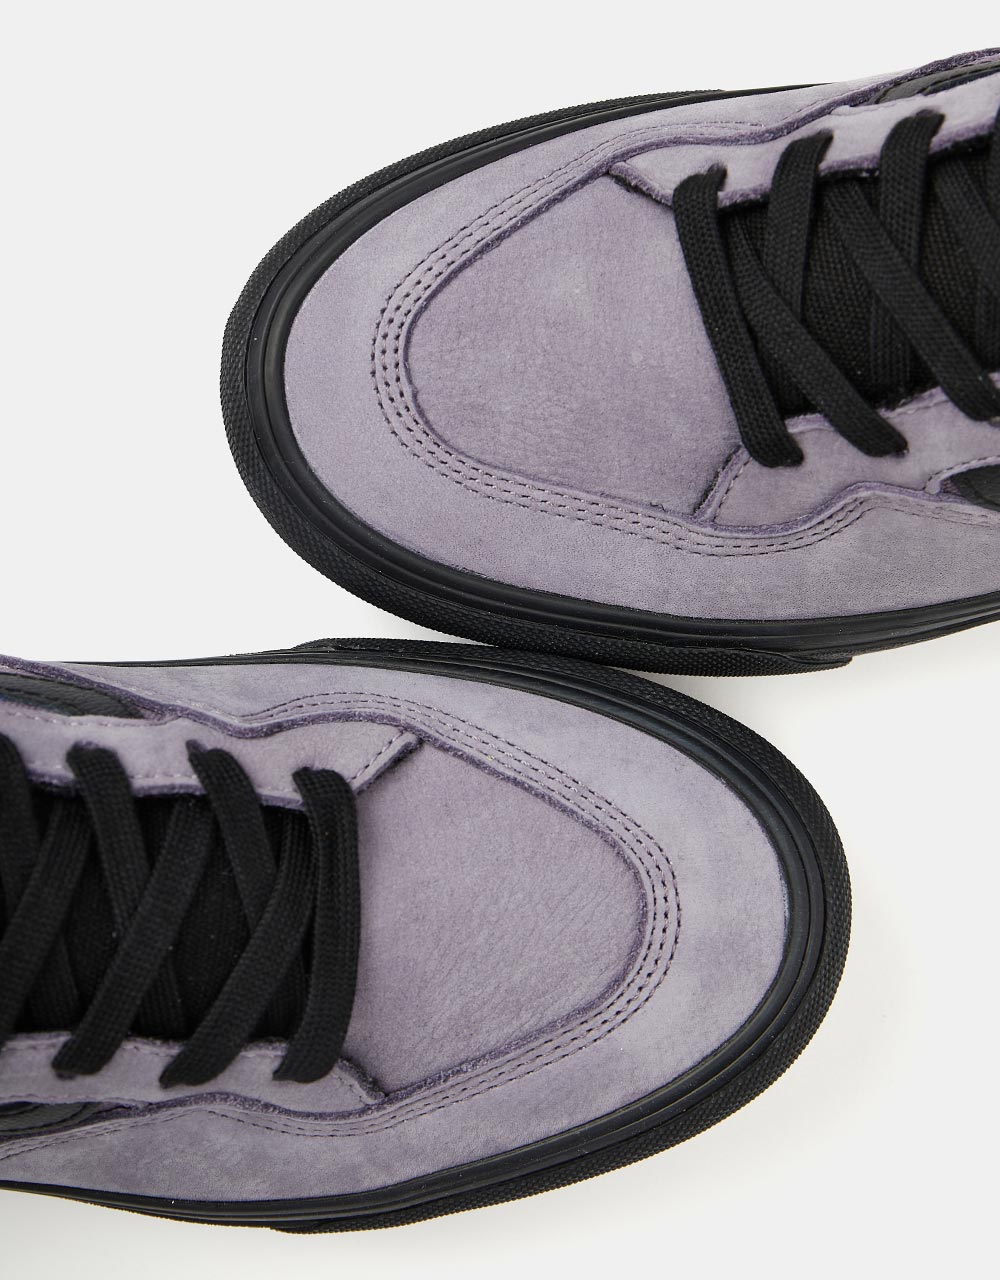 Vans Rowan Skate Shoes - Light Purple/Black